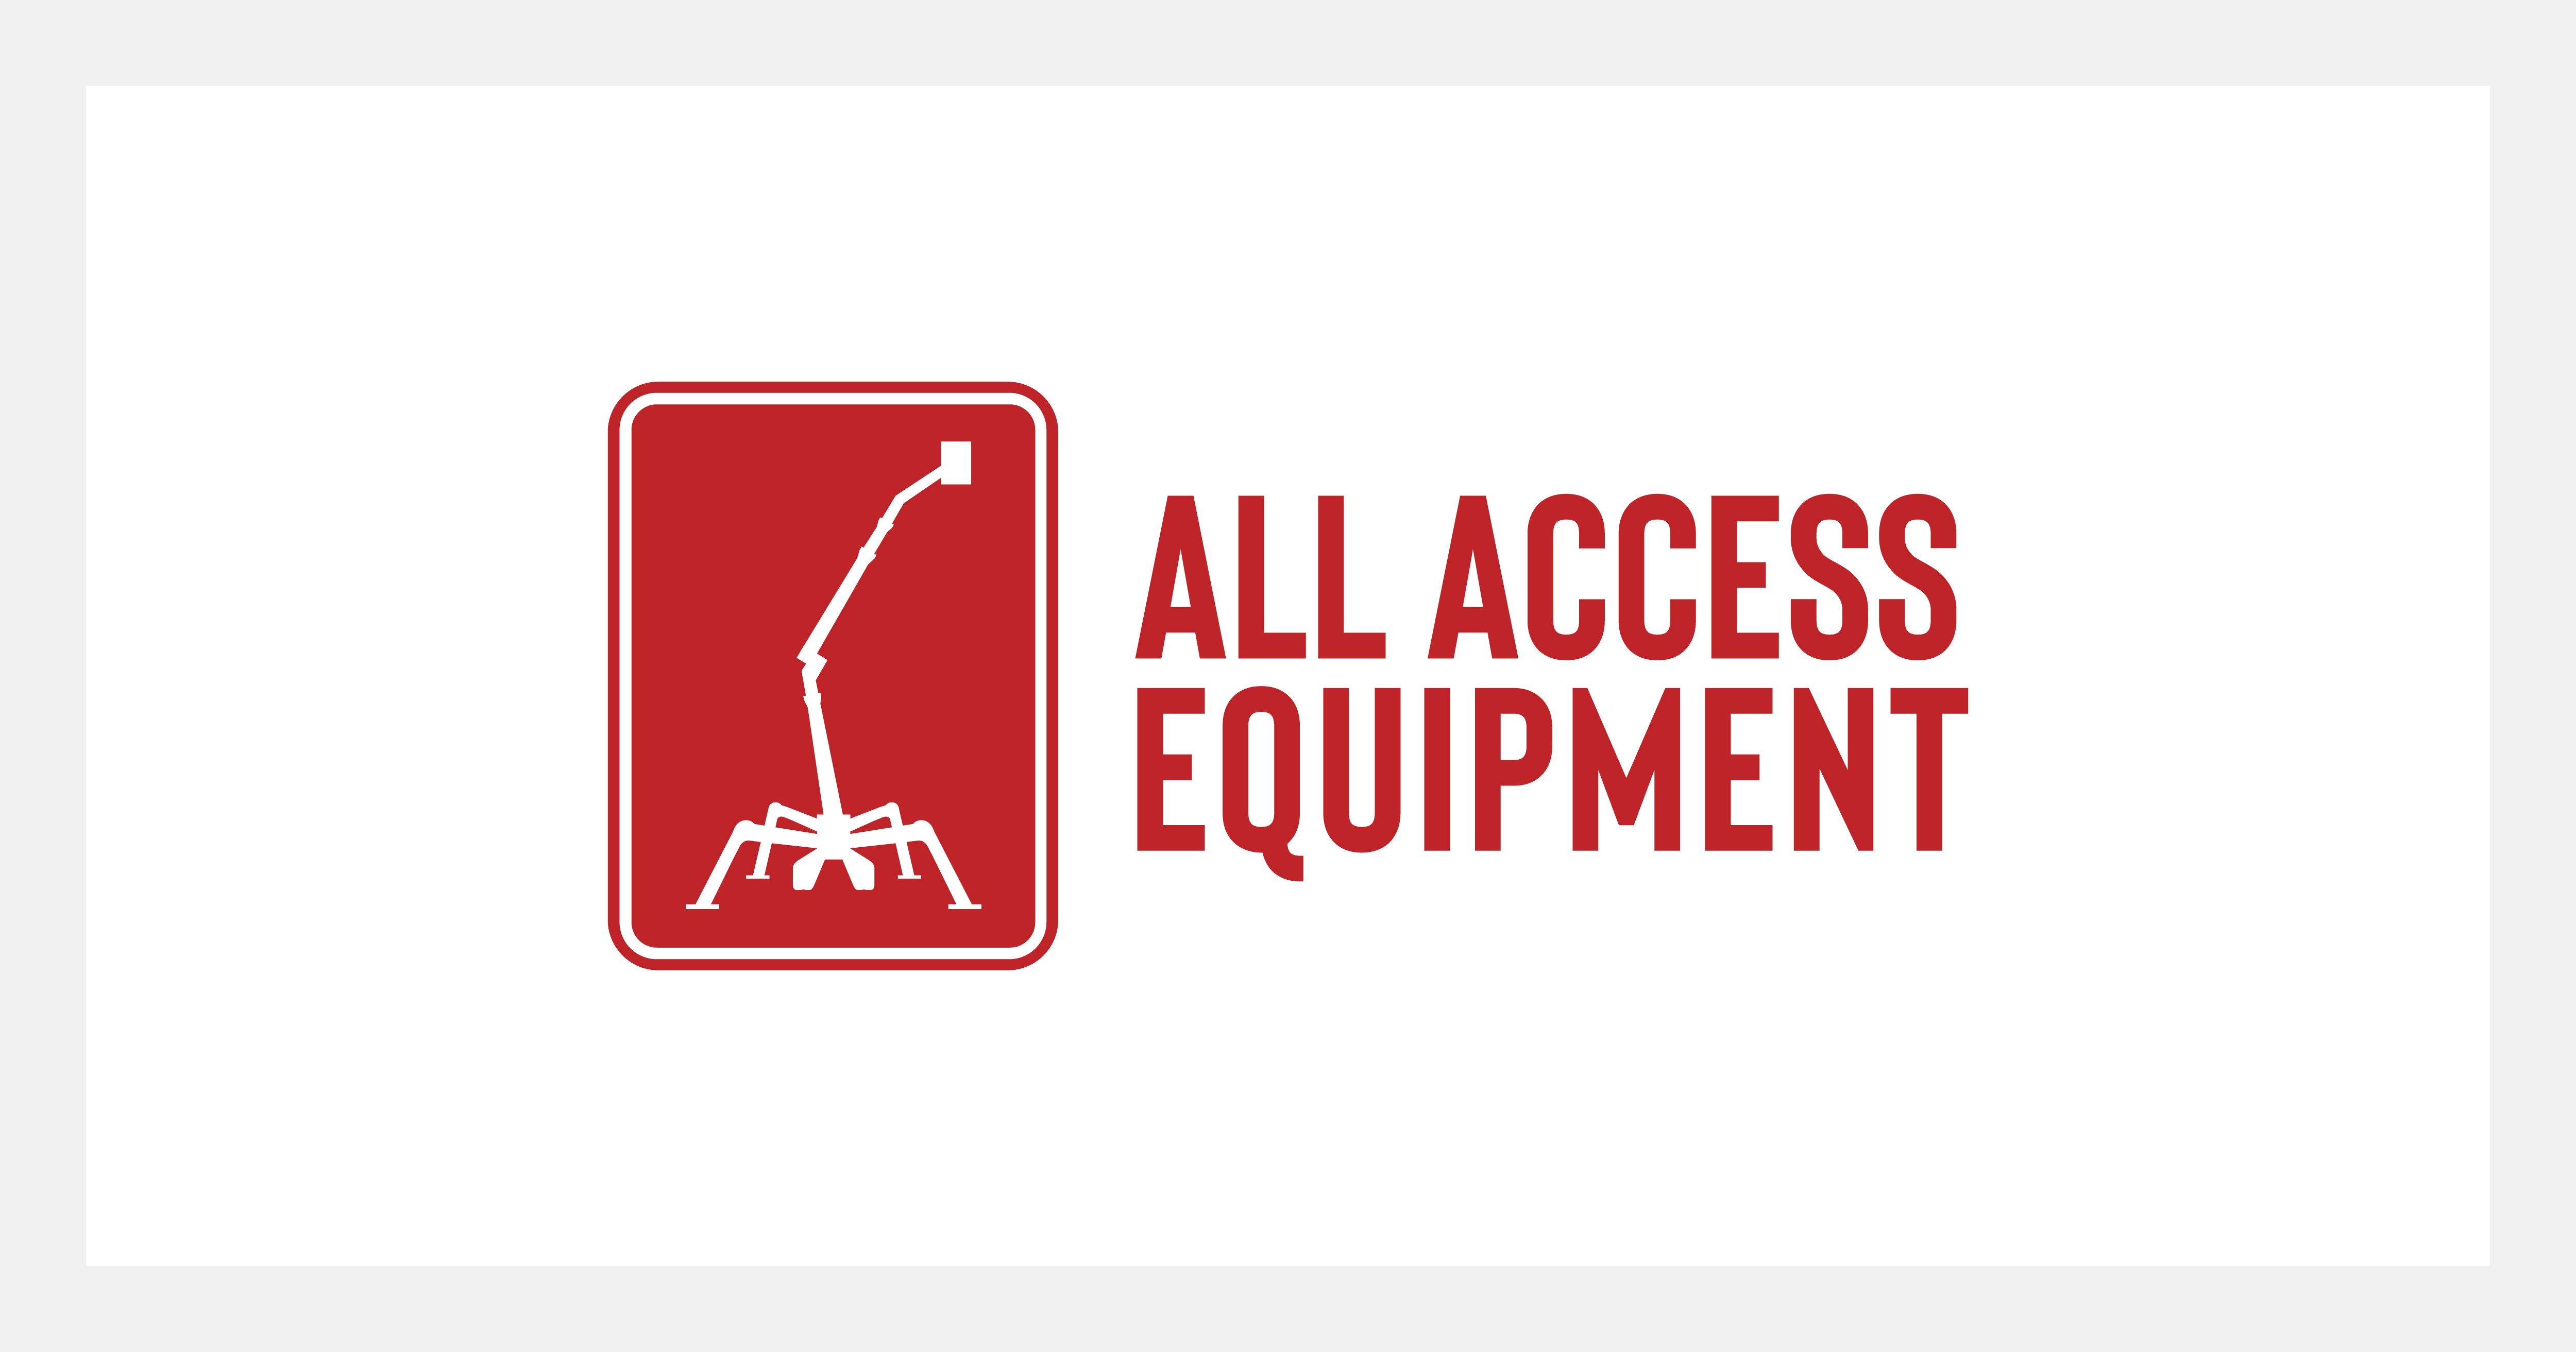 All Access Equipment